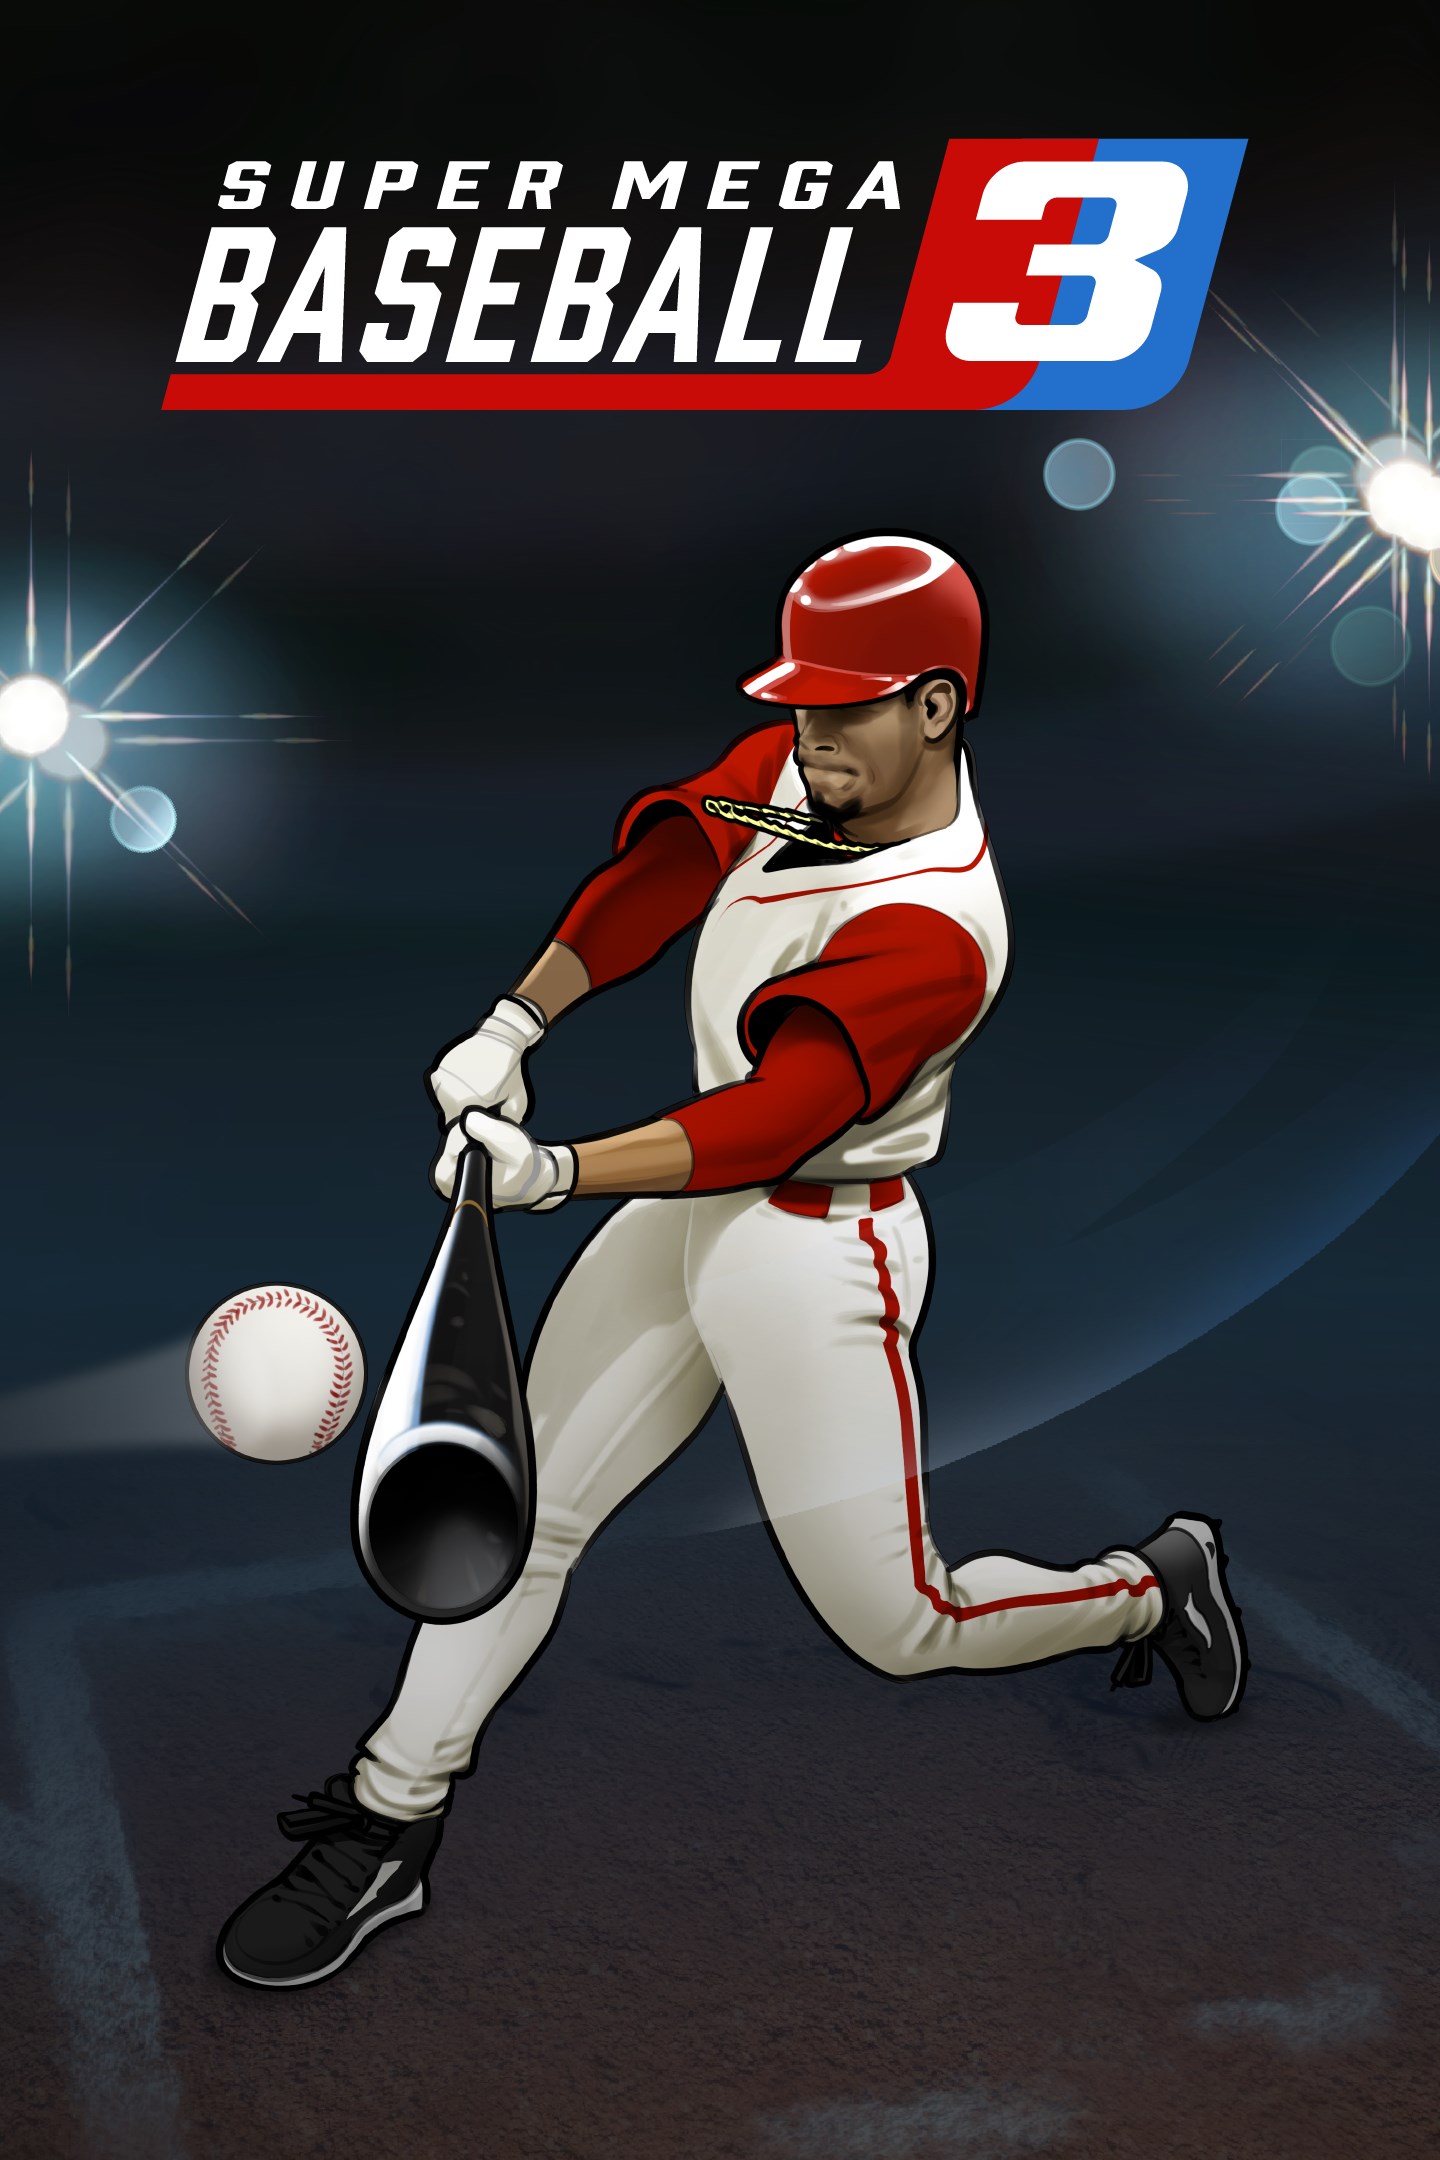 Play Super Mega Baseball 3 Xbox Cloud Gaming (Beta) on Xbox